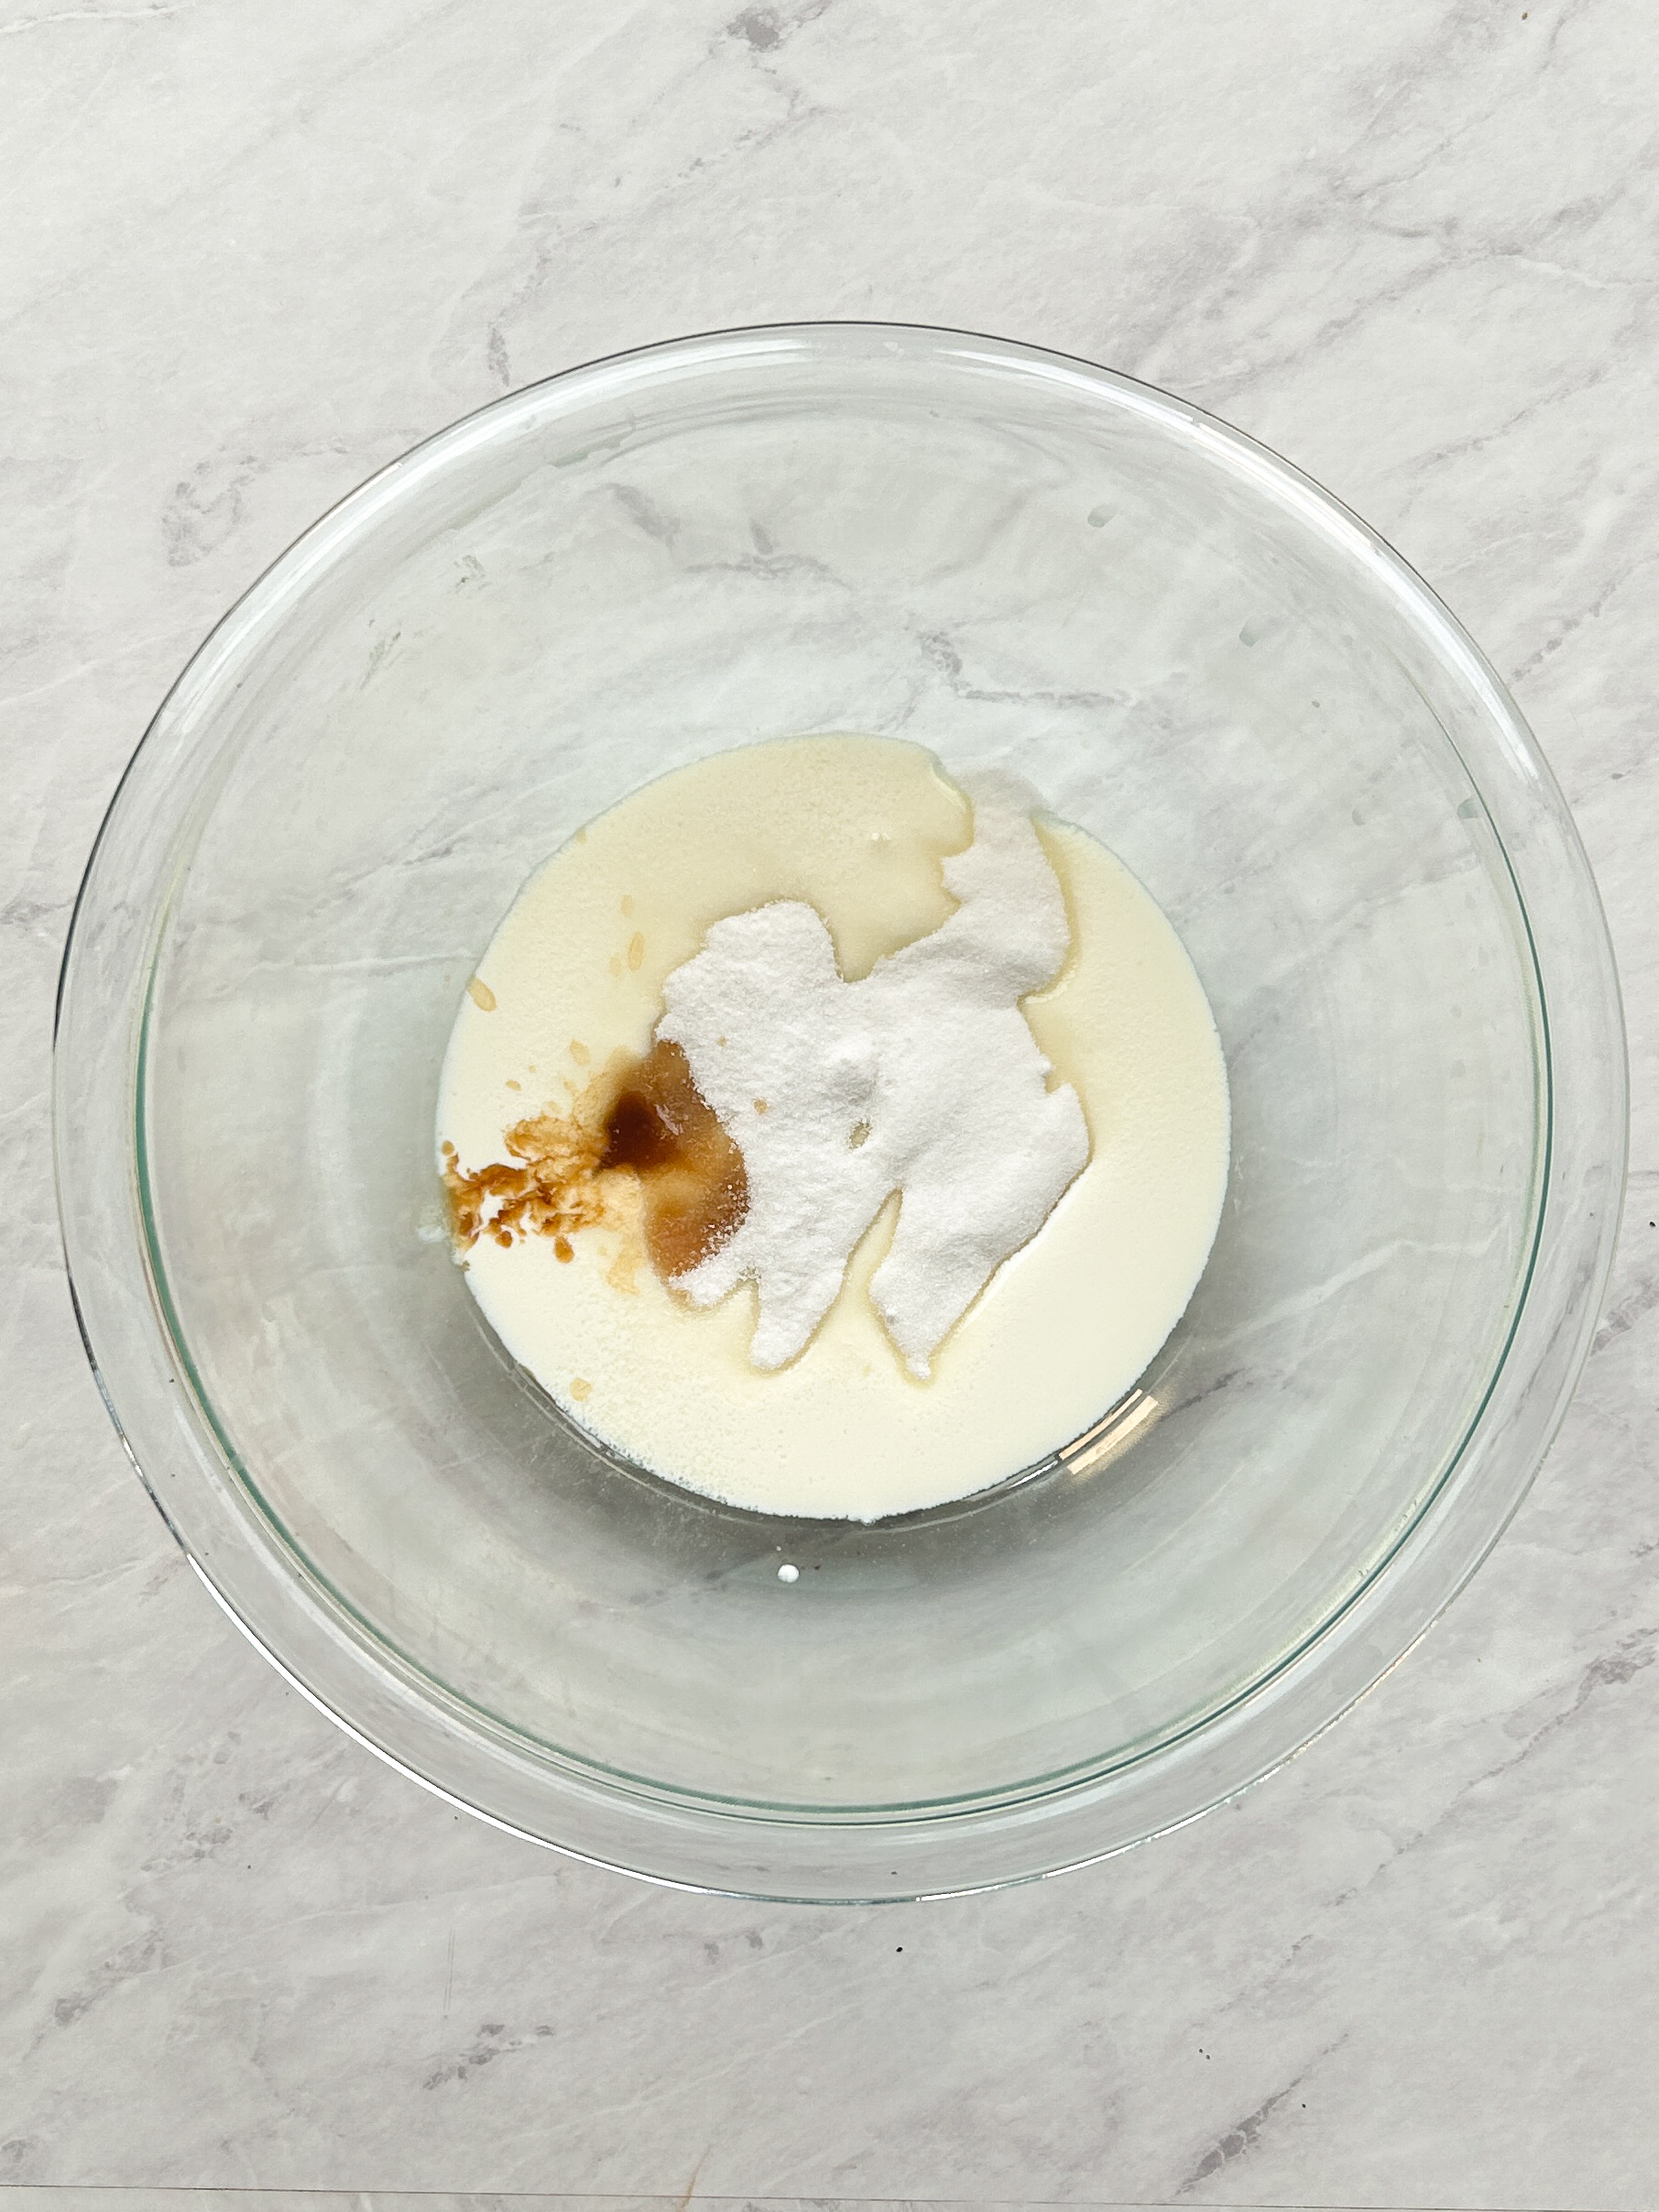 cream and sugar in a glass bowl